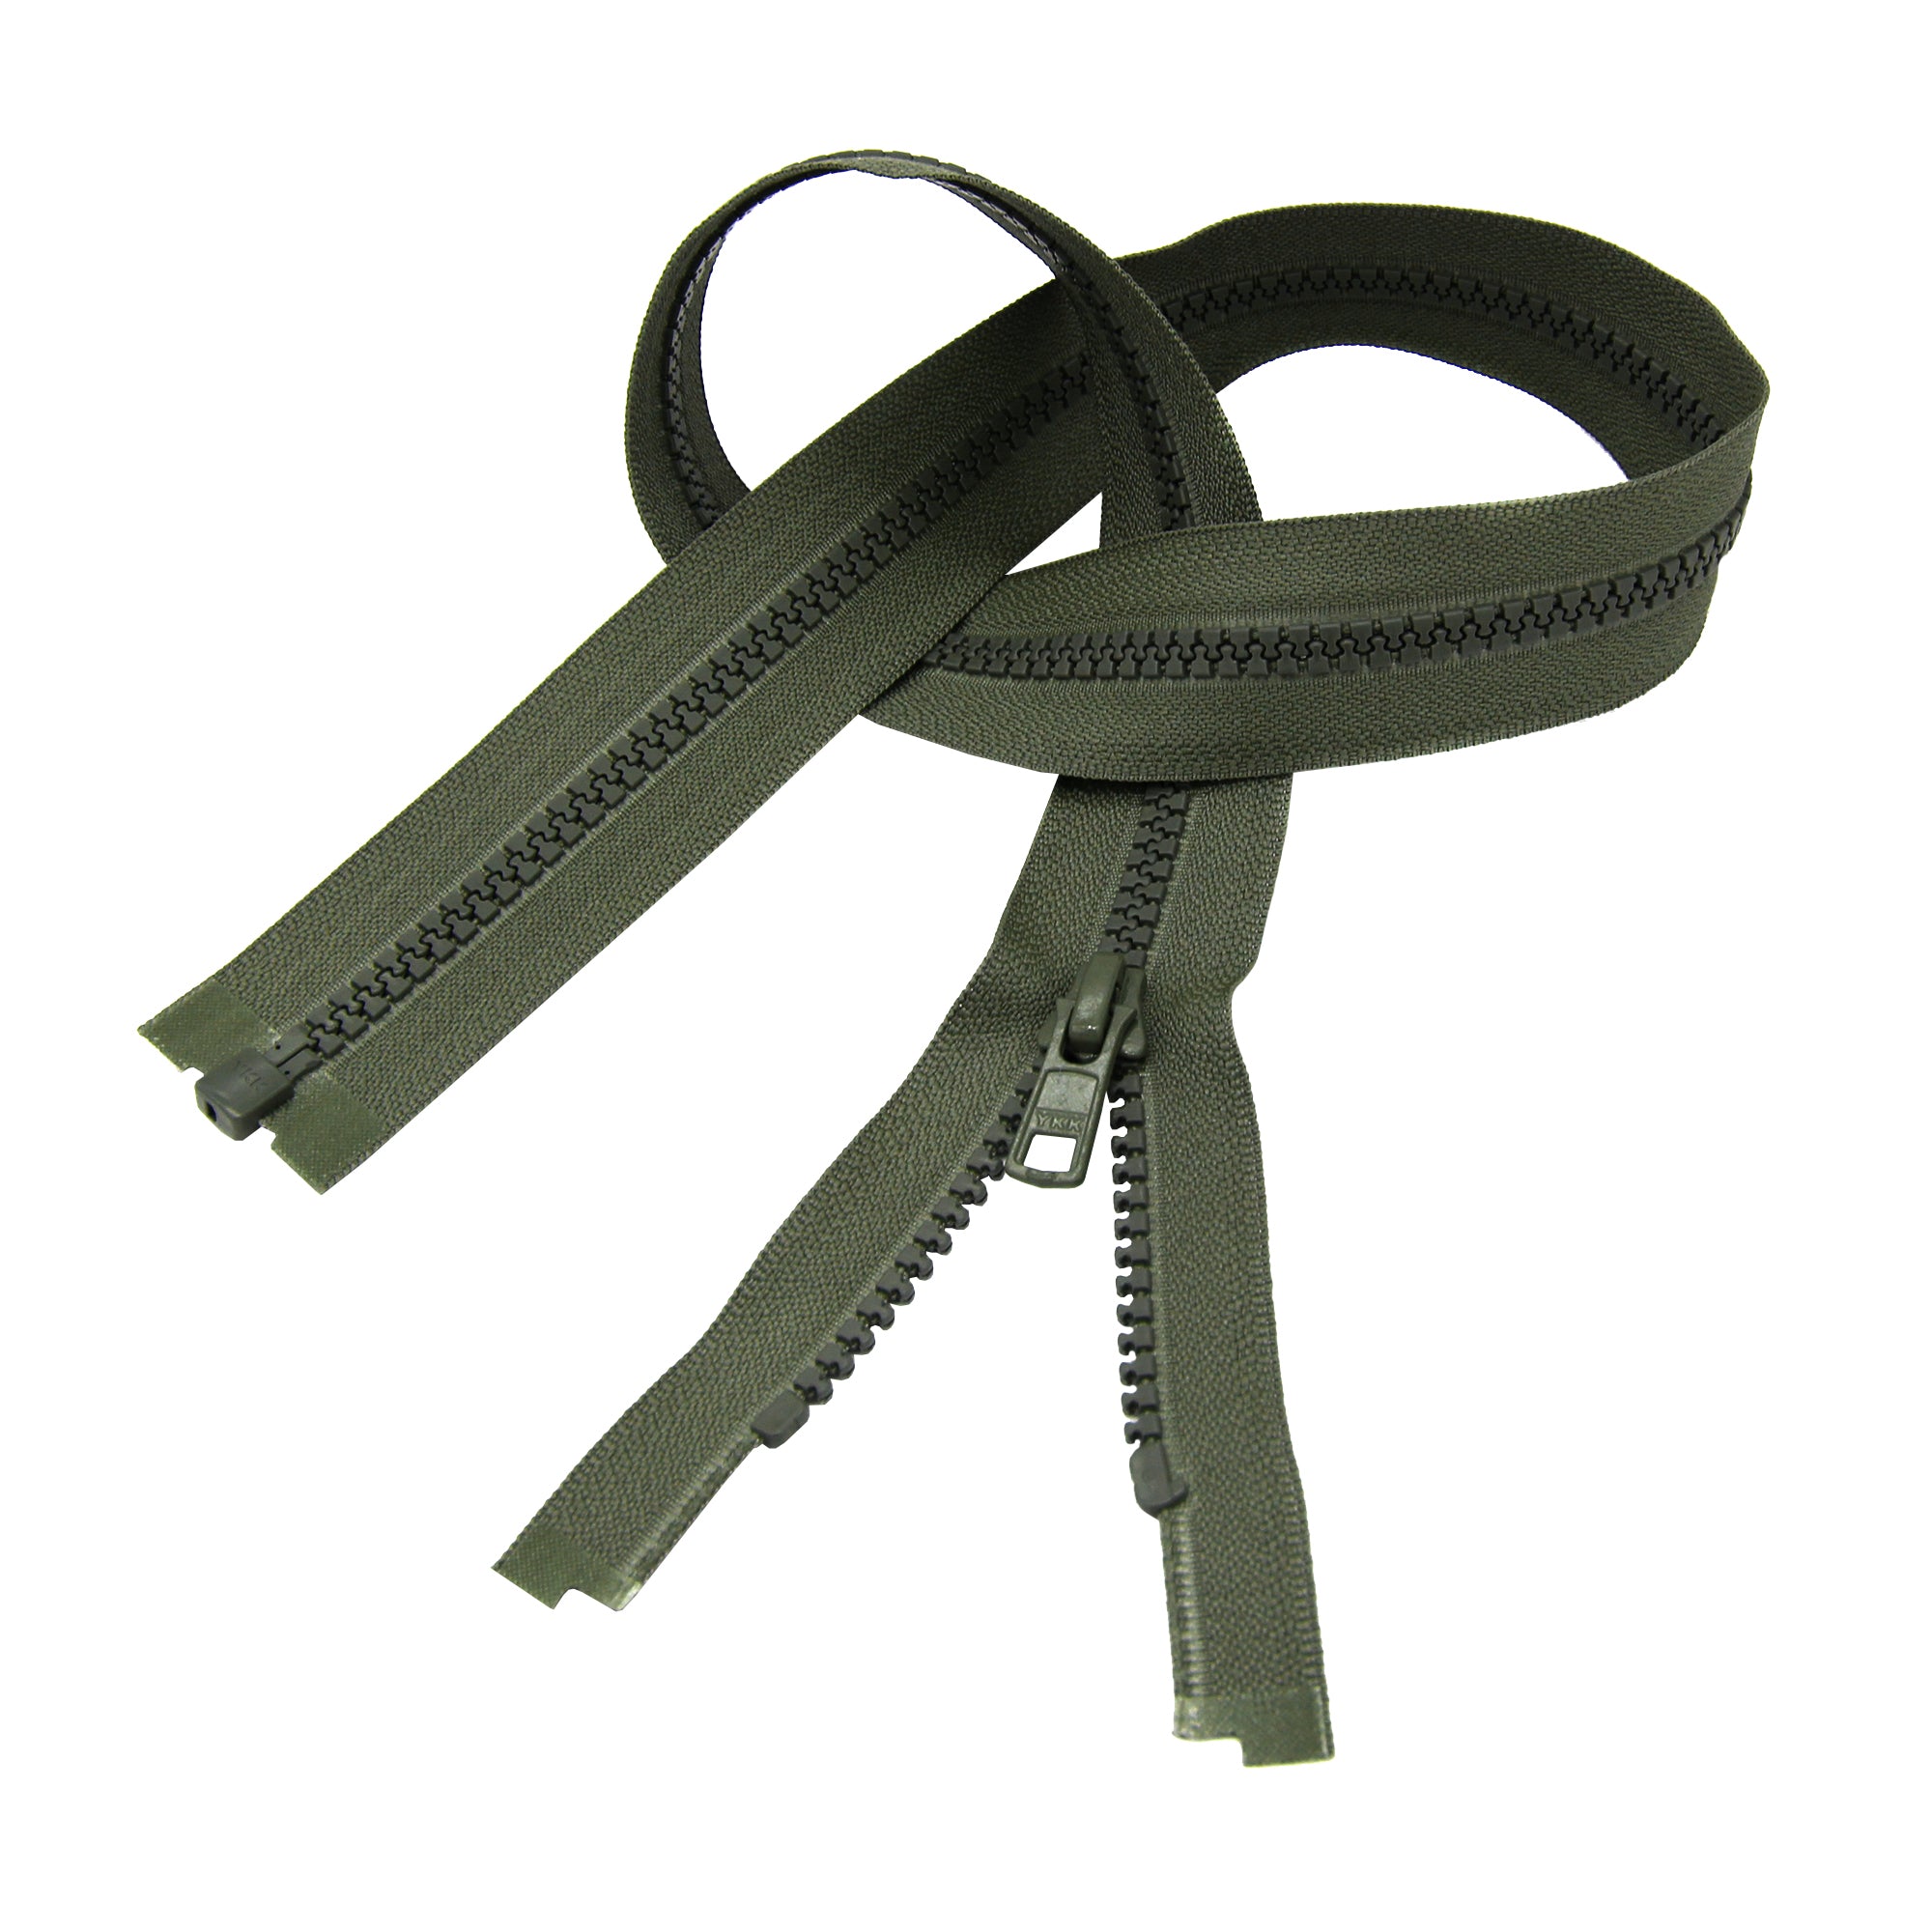 YKK # 5 Medium Weight Molded Plastic Separating Zipper - 1 Zipper per Pack  (Brown - #570) (16)